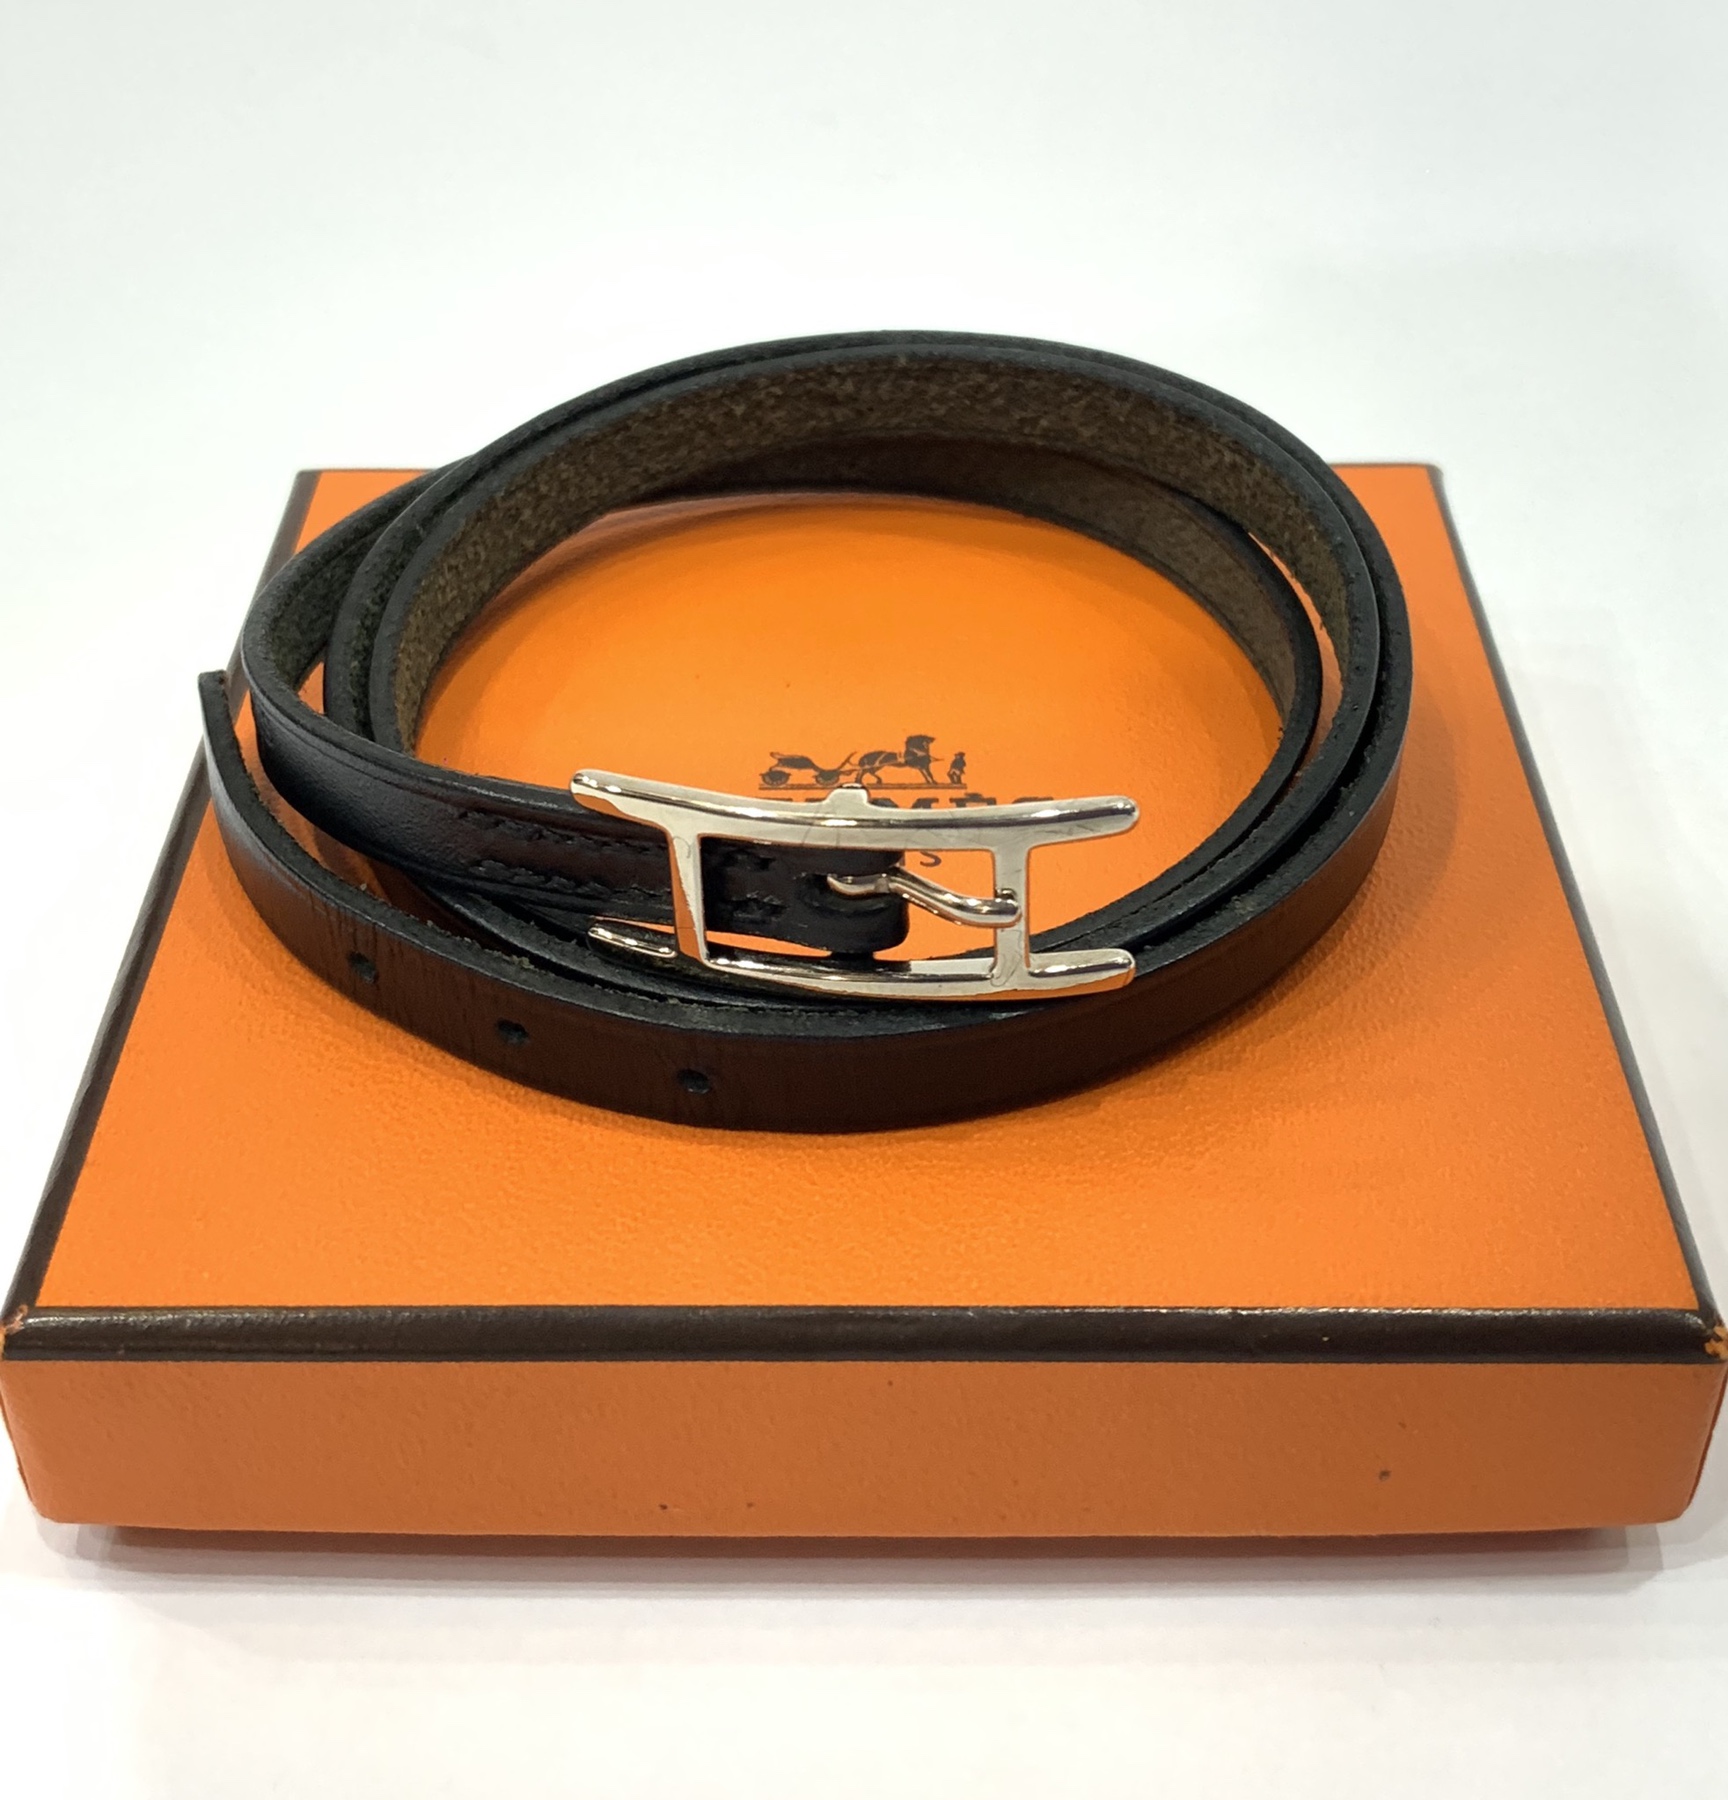 Shop Louis Vuitton Nanogram cuff (M64840, M64839) by lufine